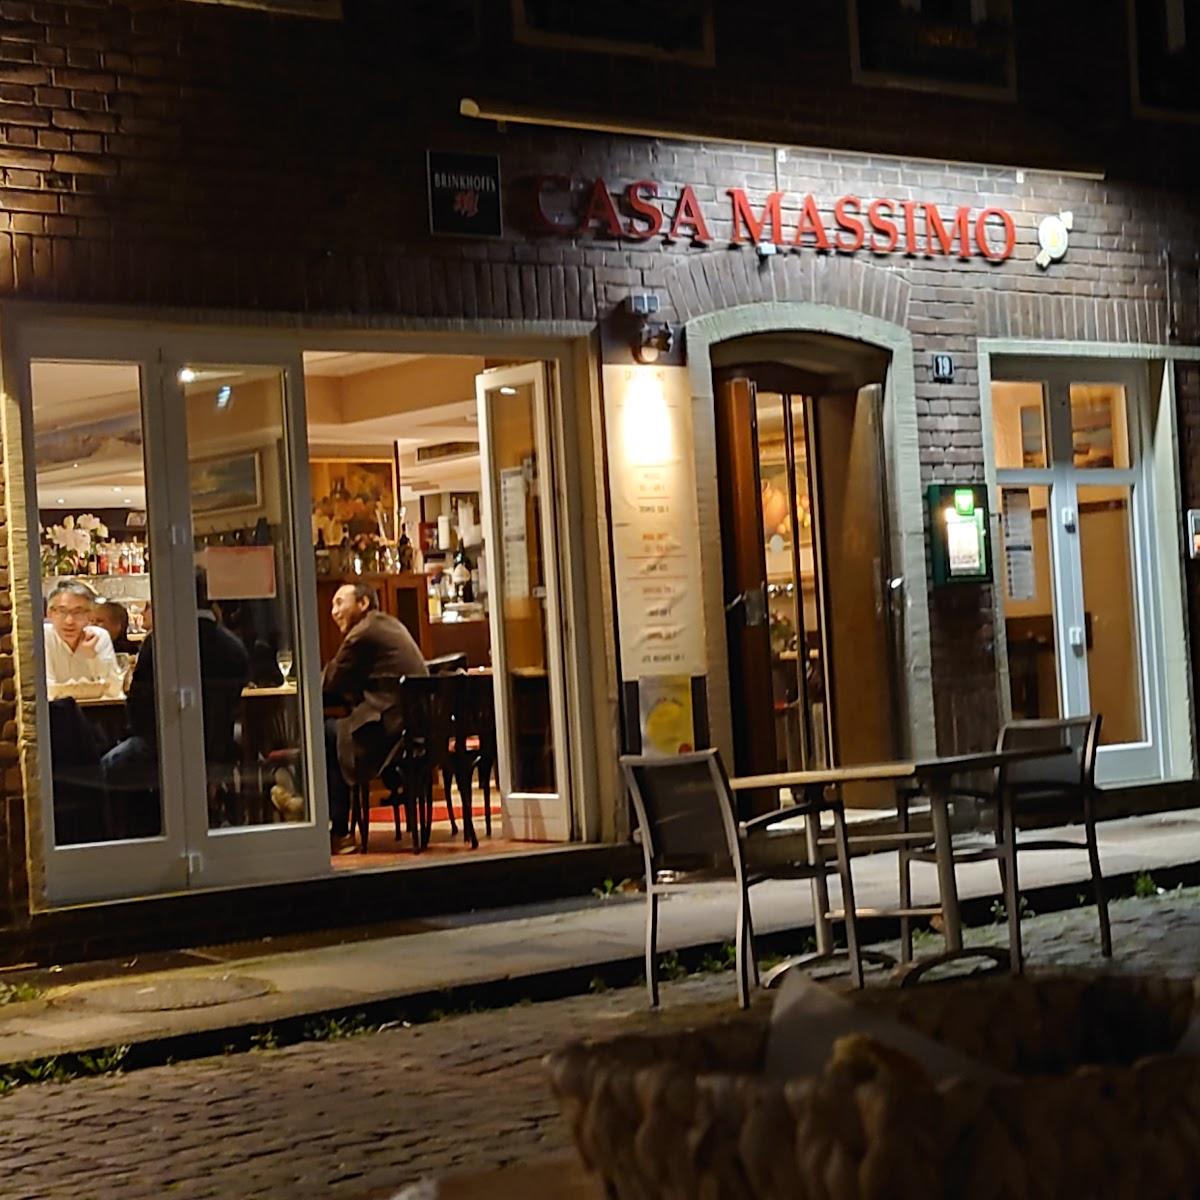 Restaurant "Casa Massimo" in Düsseldorf